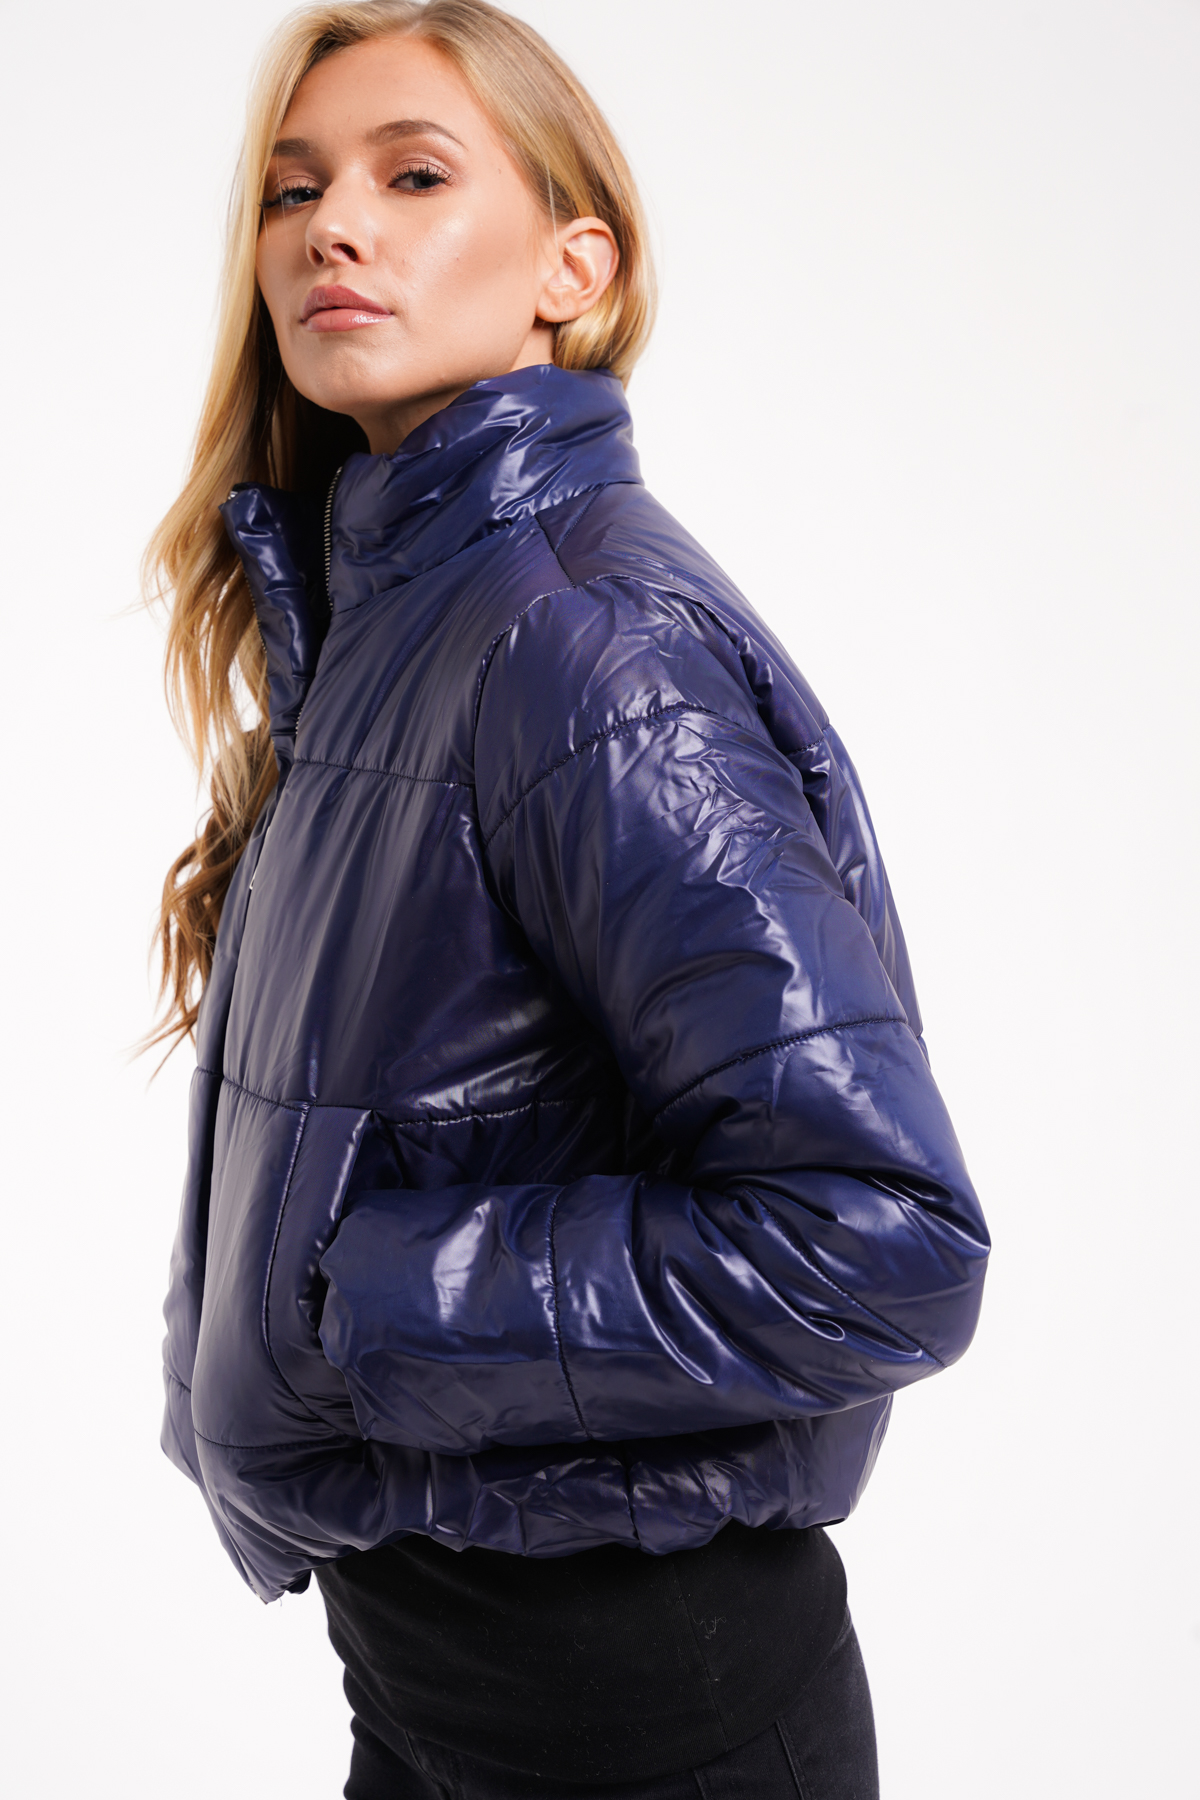 Wet Look Cropped Puffer Jacket | Affinity Wholesale Fashion